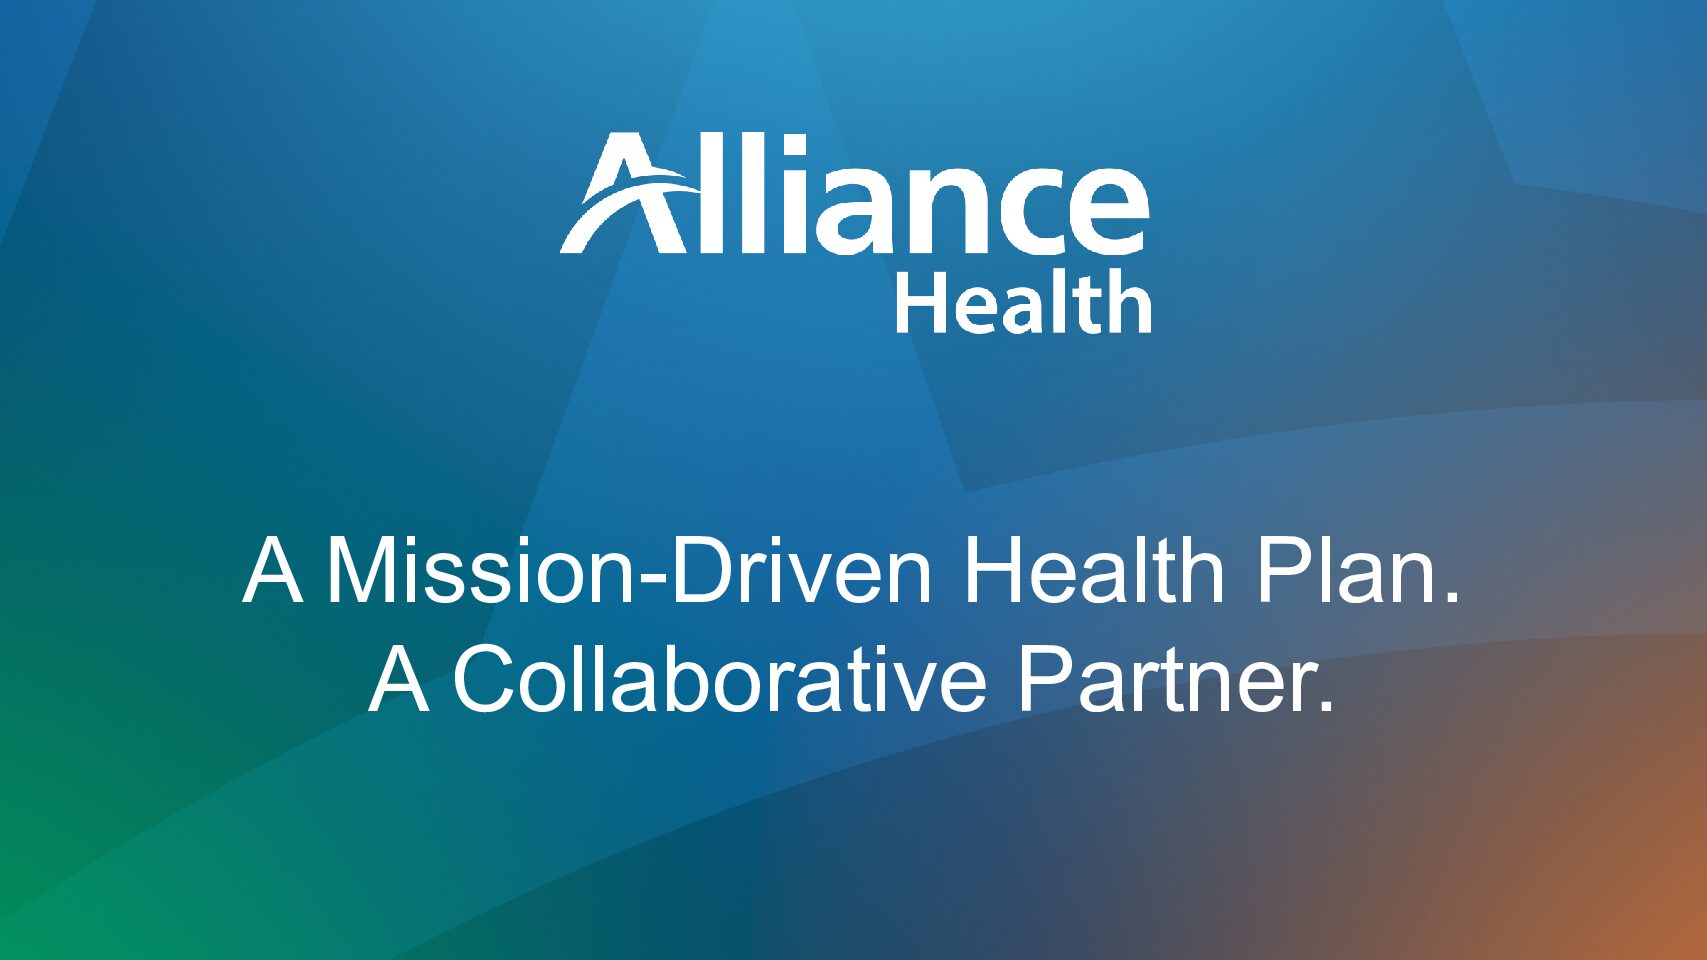 Alliance Health - A Mission-Driven Health Plan. A Collaborative Partner.